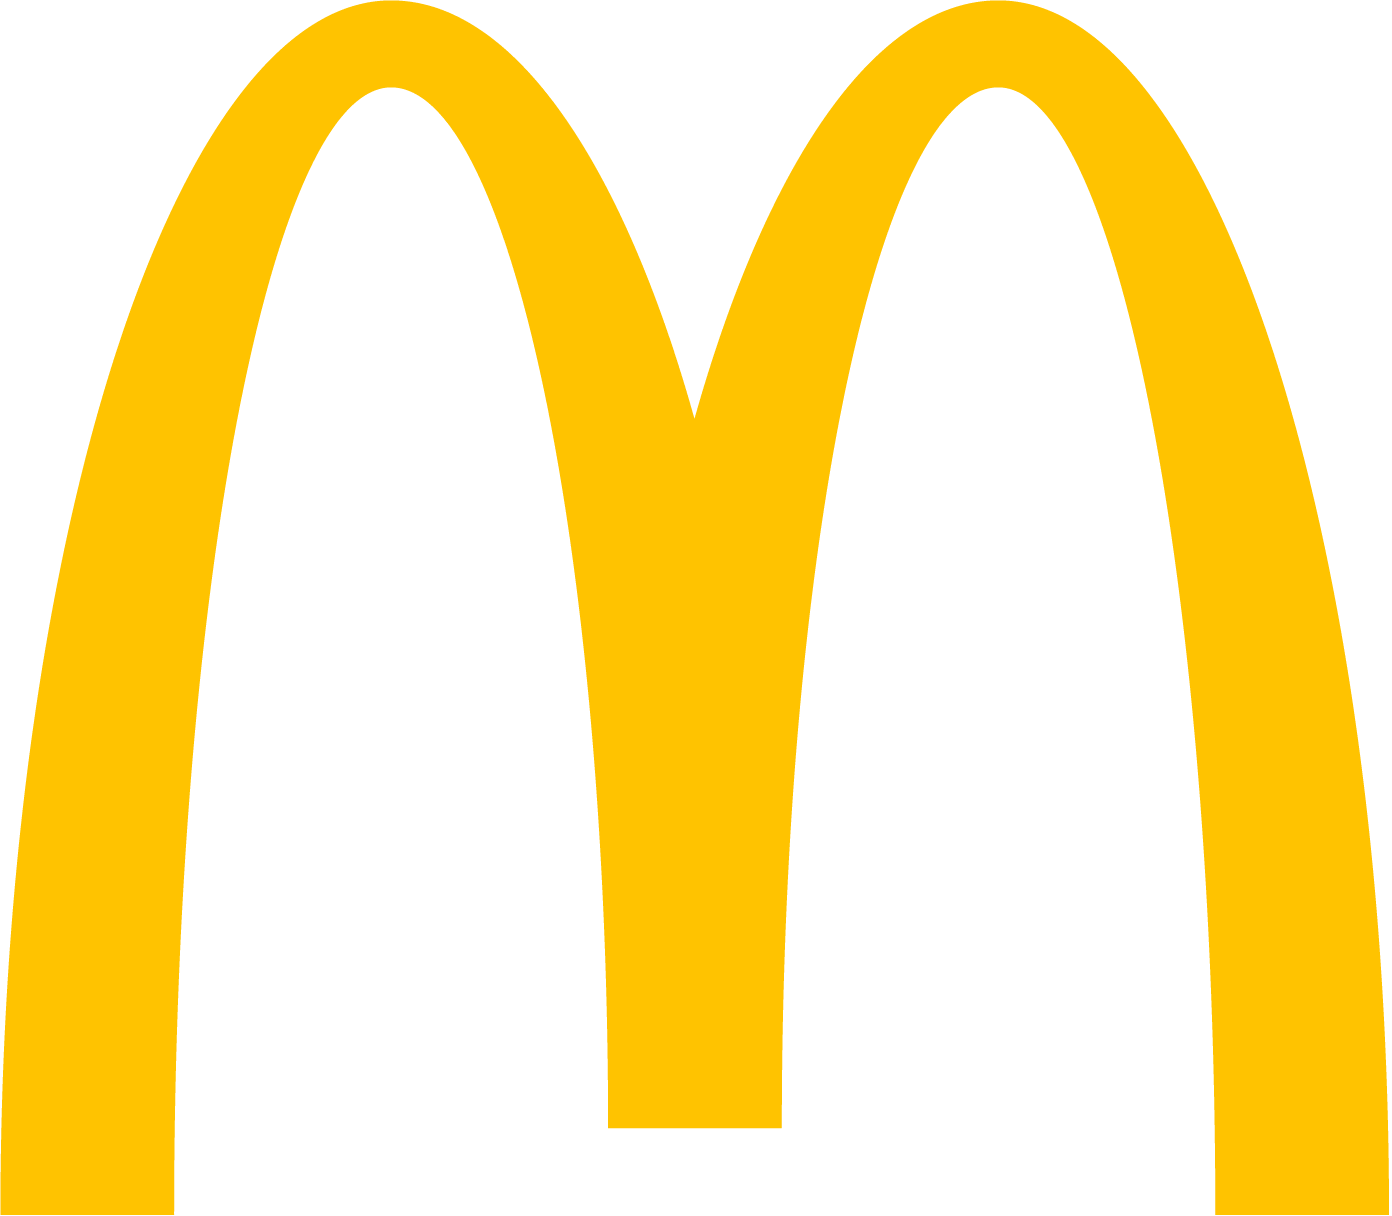 Golden Restaurant Mcdonald'S Arches Logo Mcdonalds Oldest Clipart